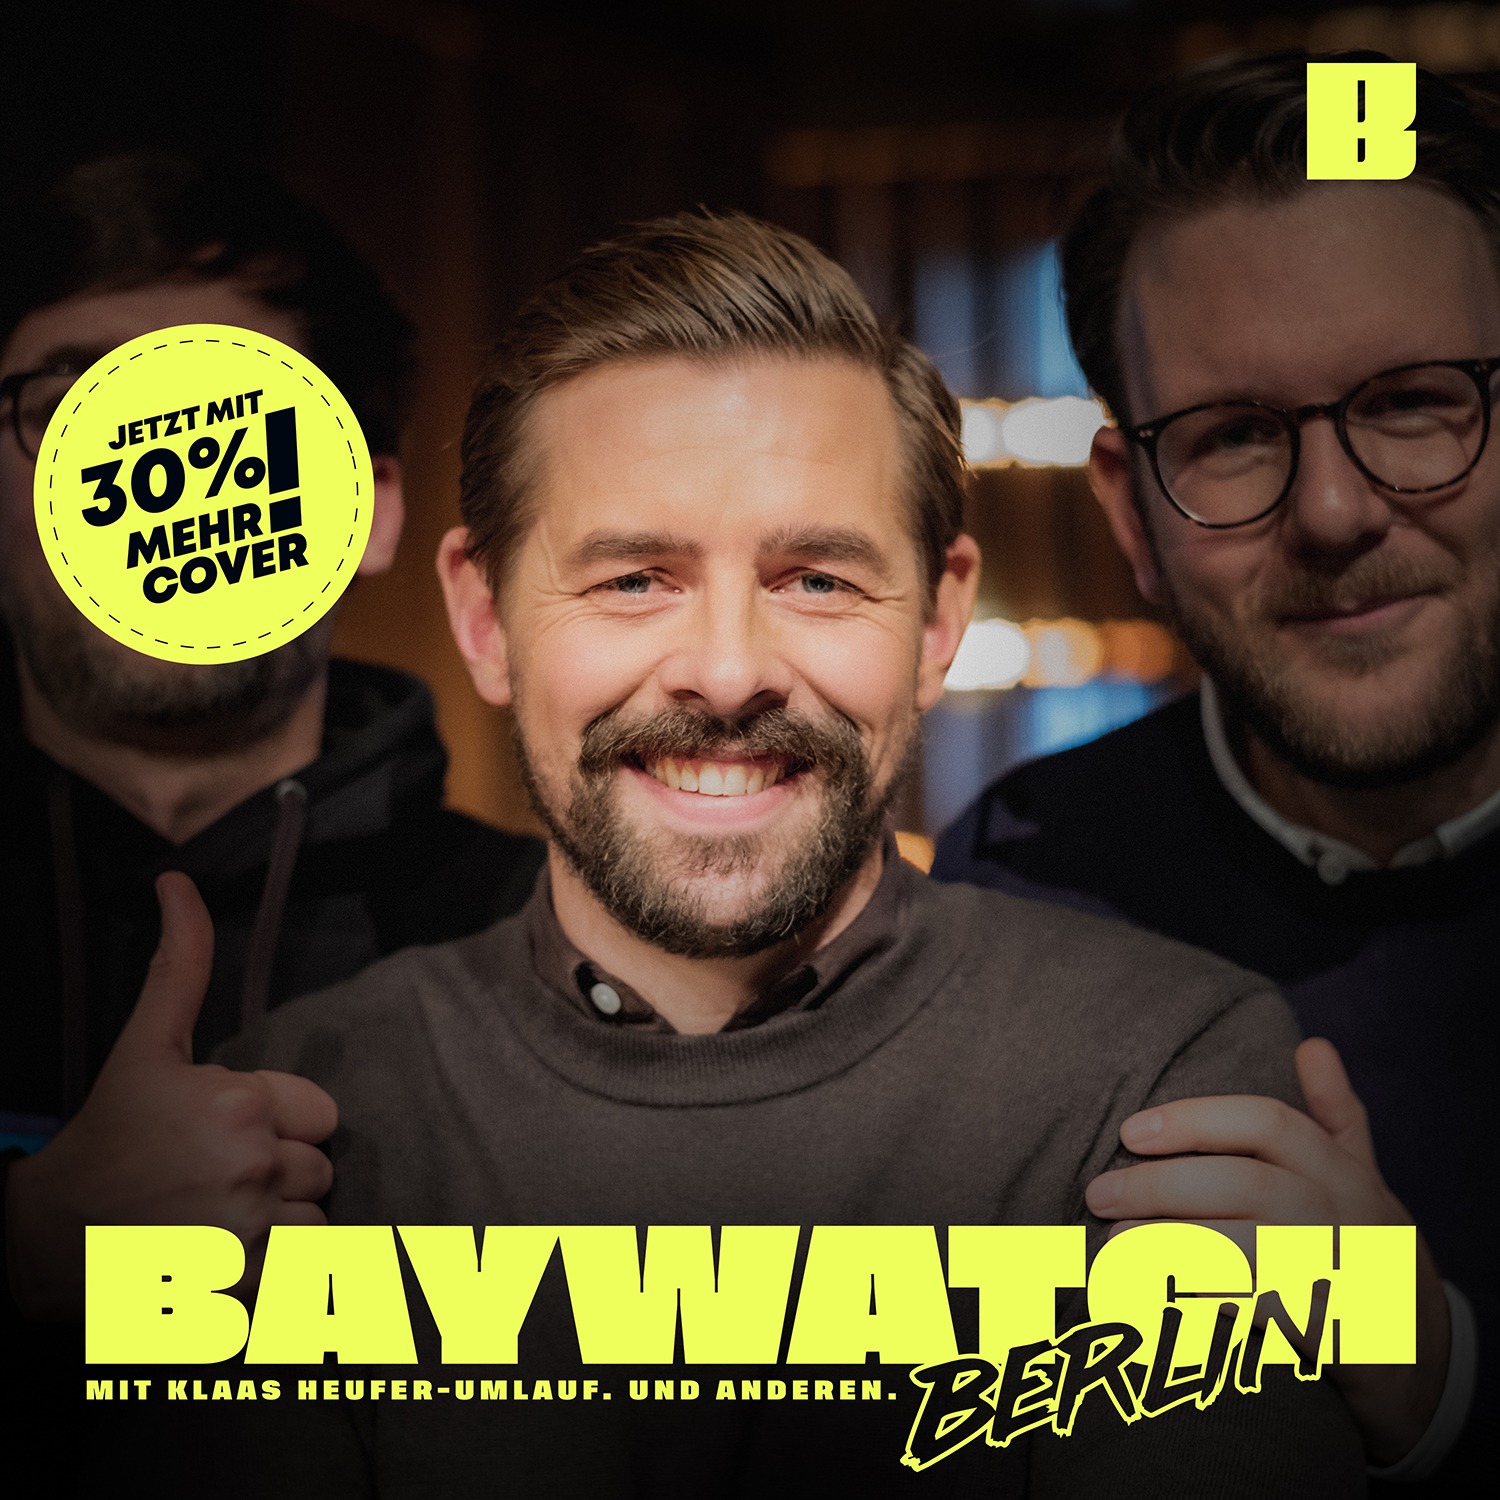 Baywatch Berlin logo